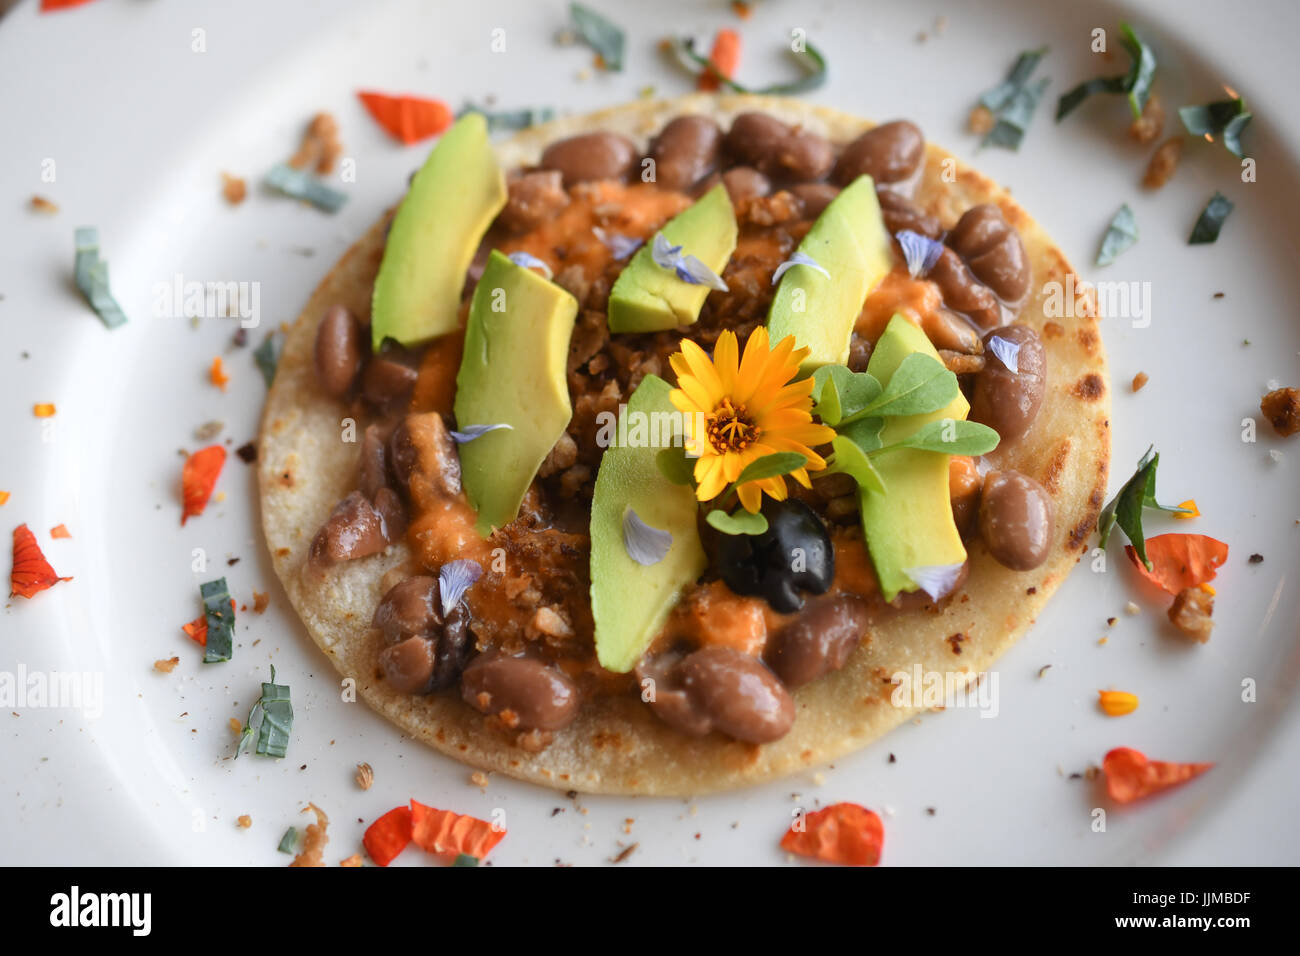 Taco Tuesday, vegan tacos with chorizo beans, vegan cheese, avocado, blue flower petal and a yellow flower. Stock Photo